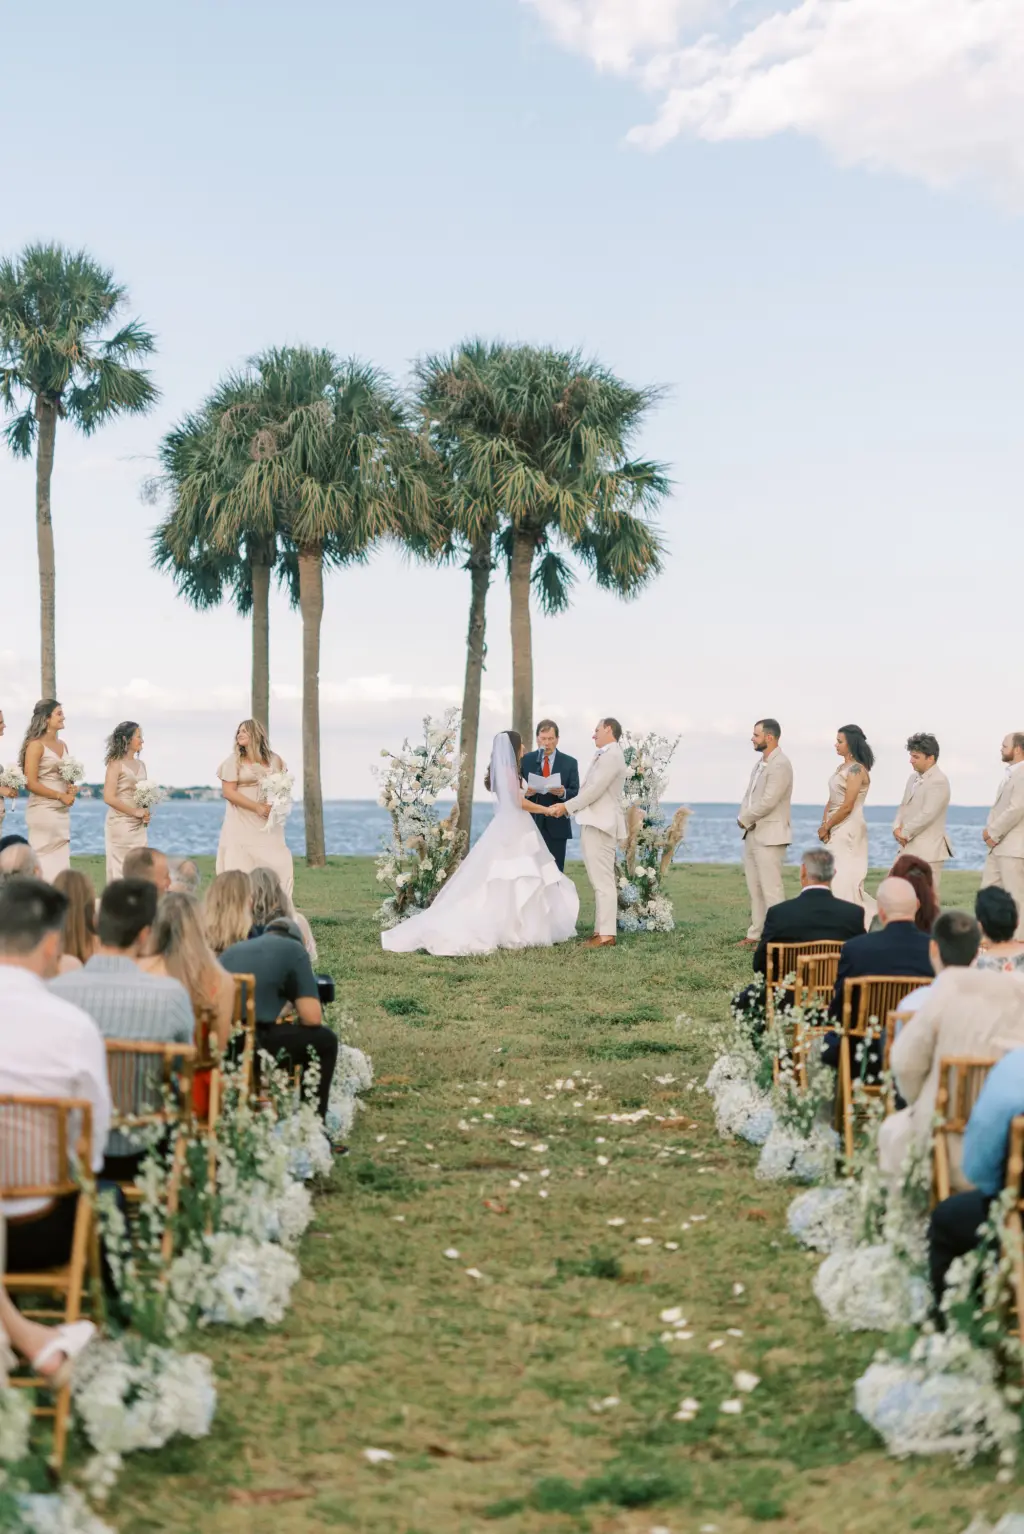 Outdoor Waterfront Florida Wedding Ceremony | St. Petersburg Florida Event Venue St. Pete Pier